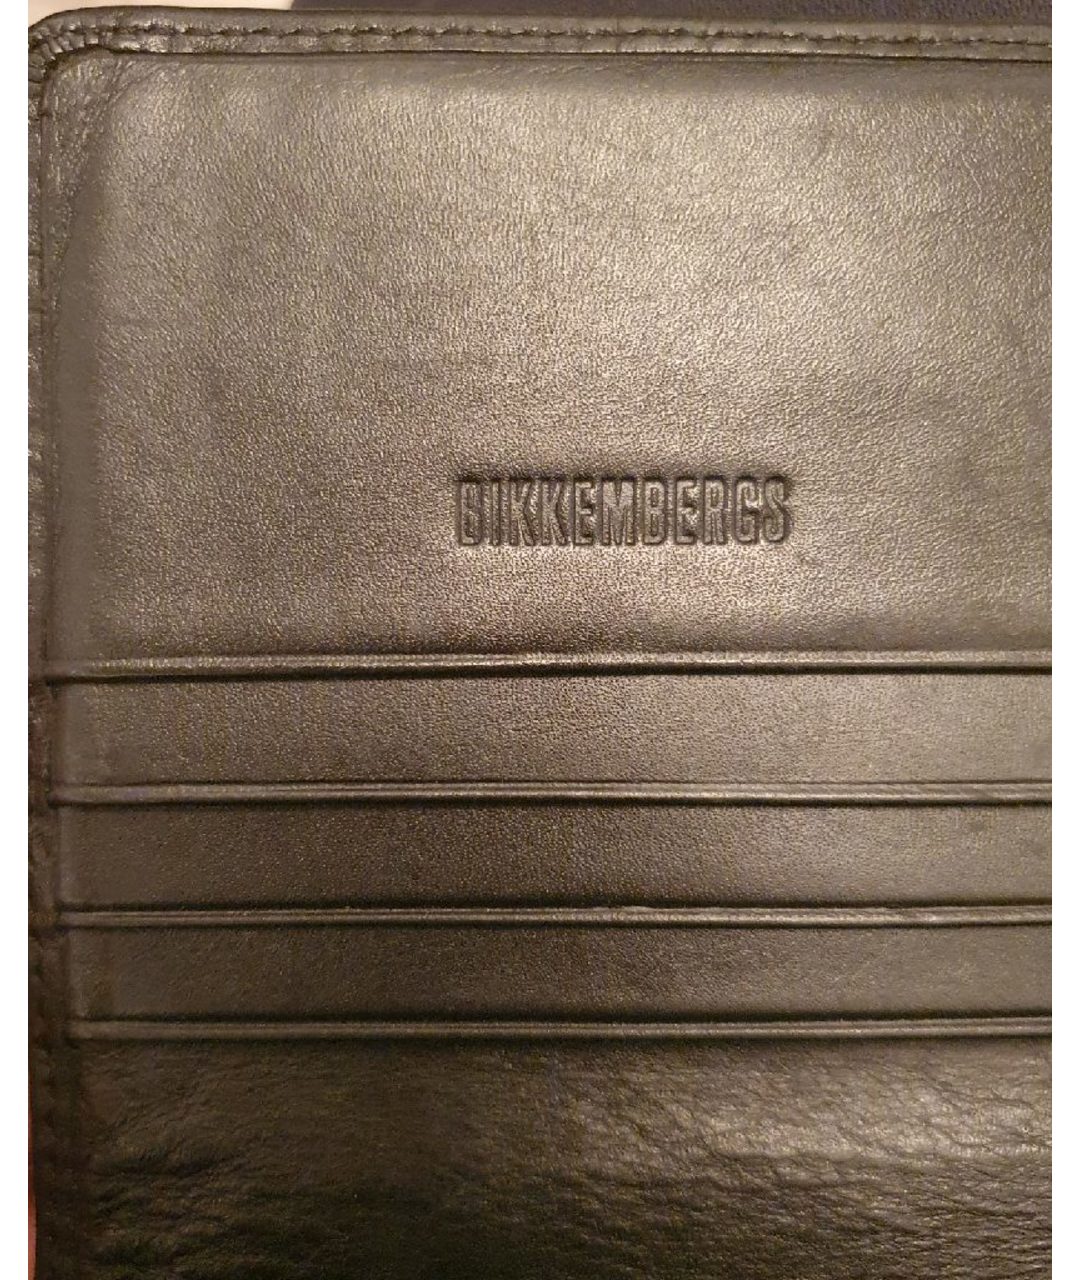 BIKKEMBERGS Черный кожаный кошелек, фото 4